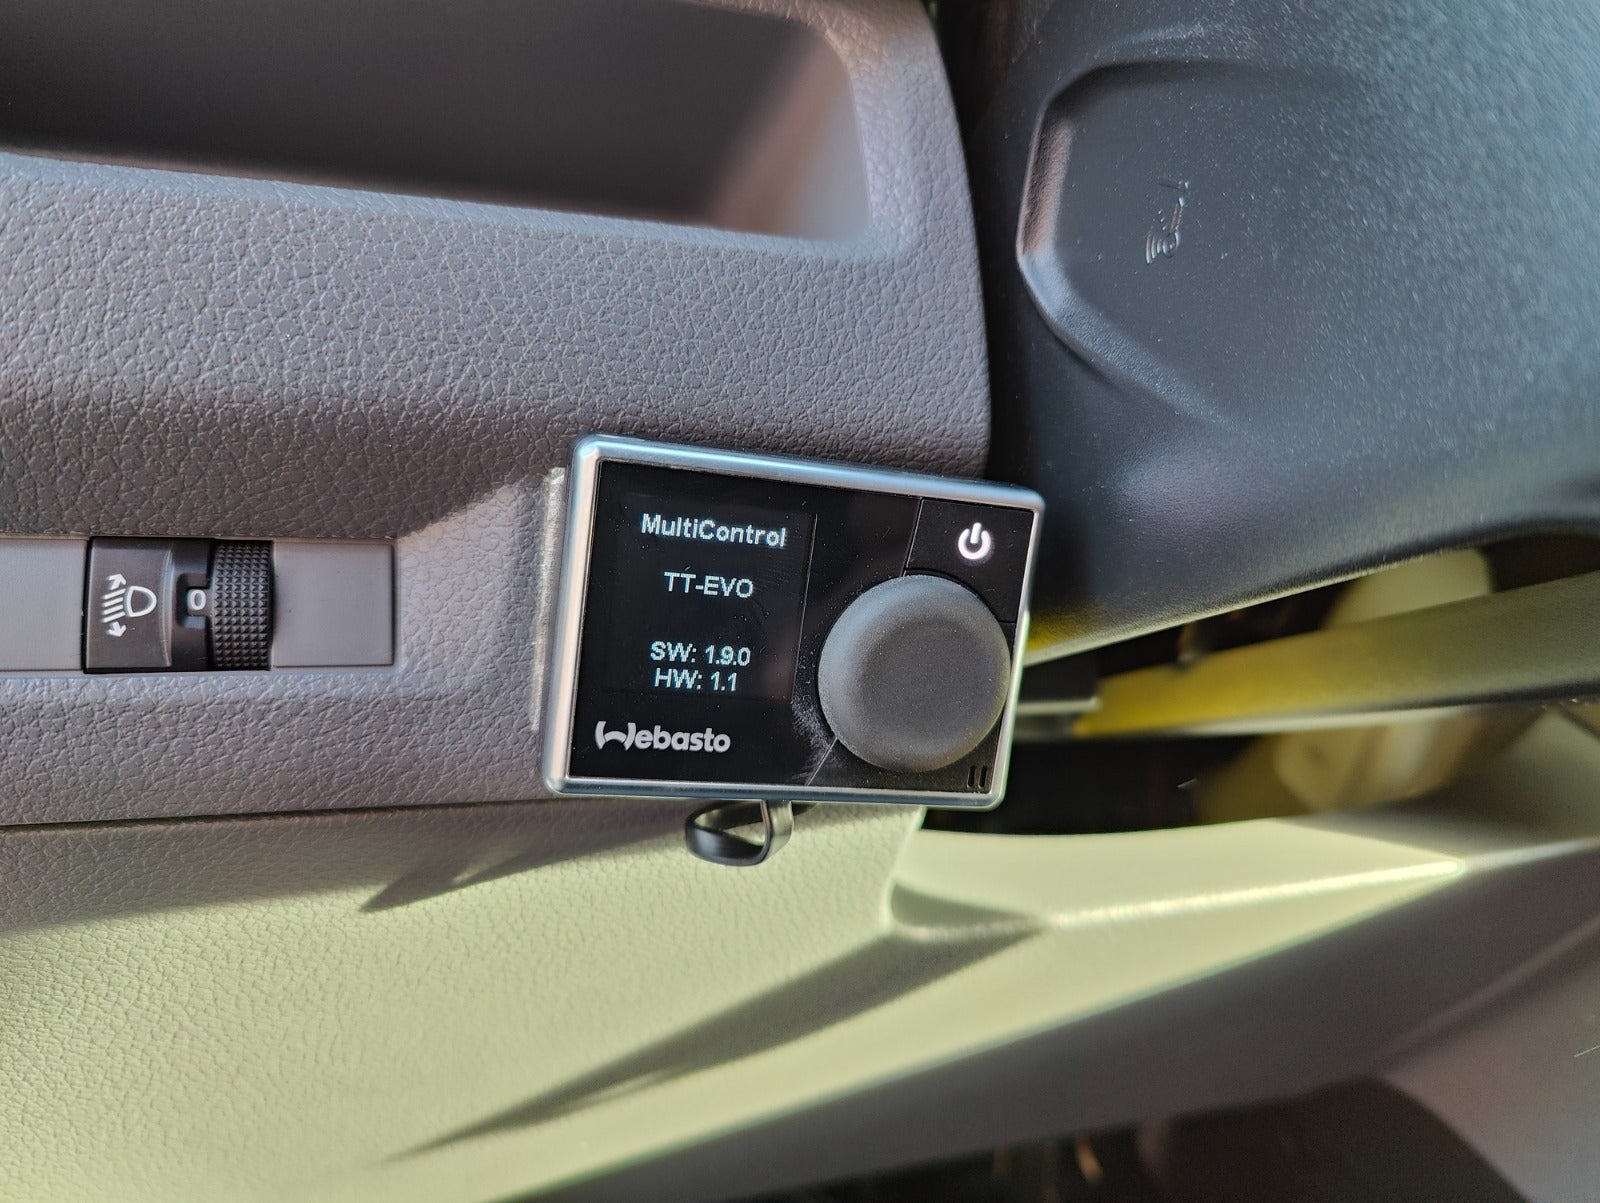 Toyota ProAce 1,6 D 95 Medium Comfort MMT Diesel aut.